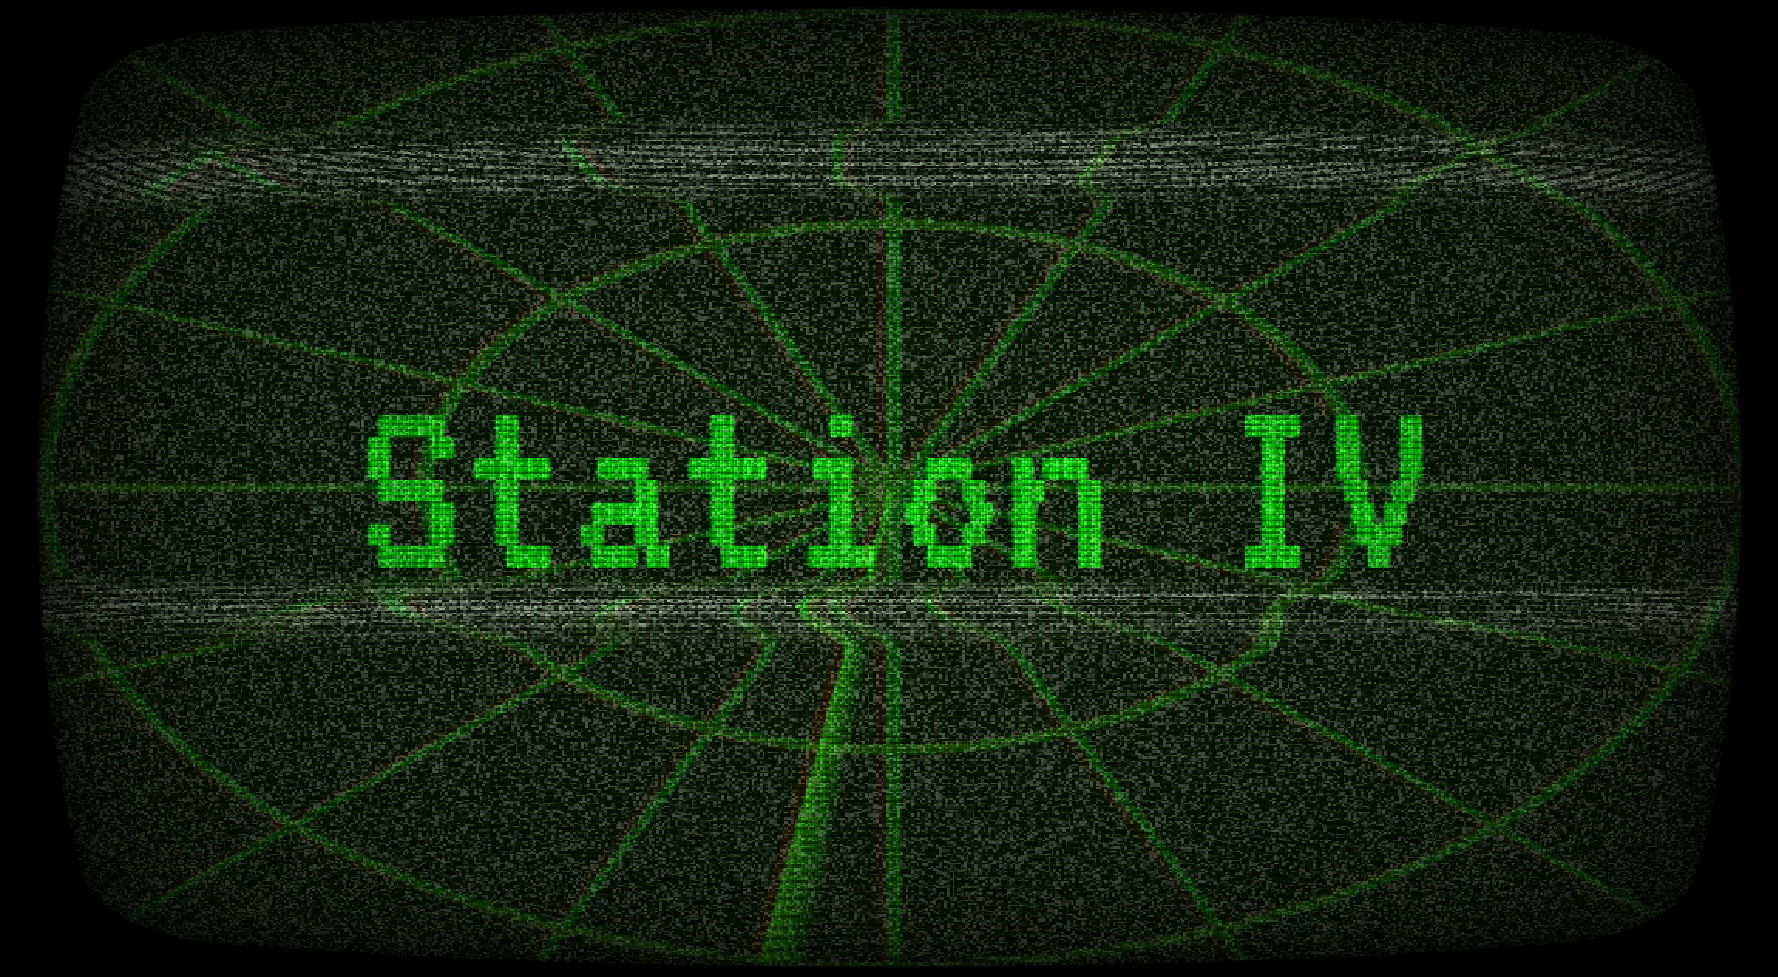 Station IV